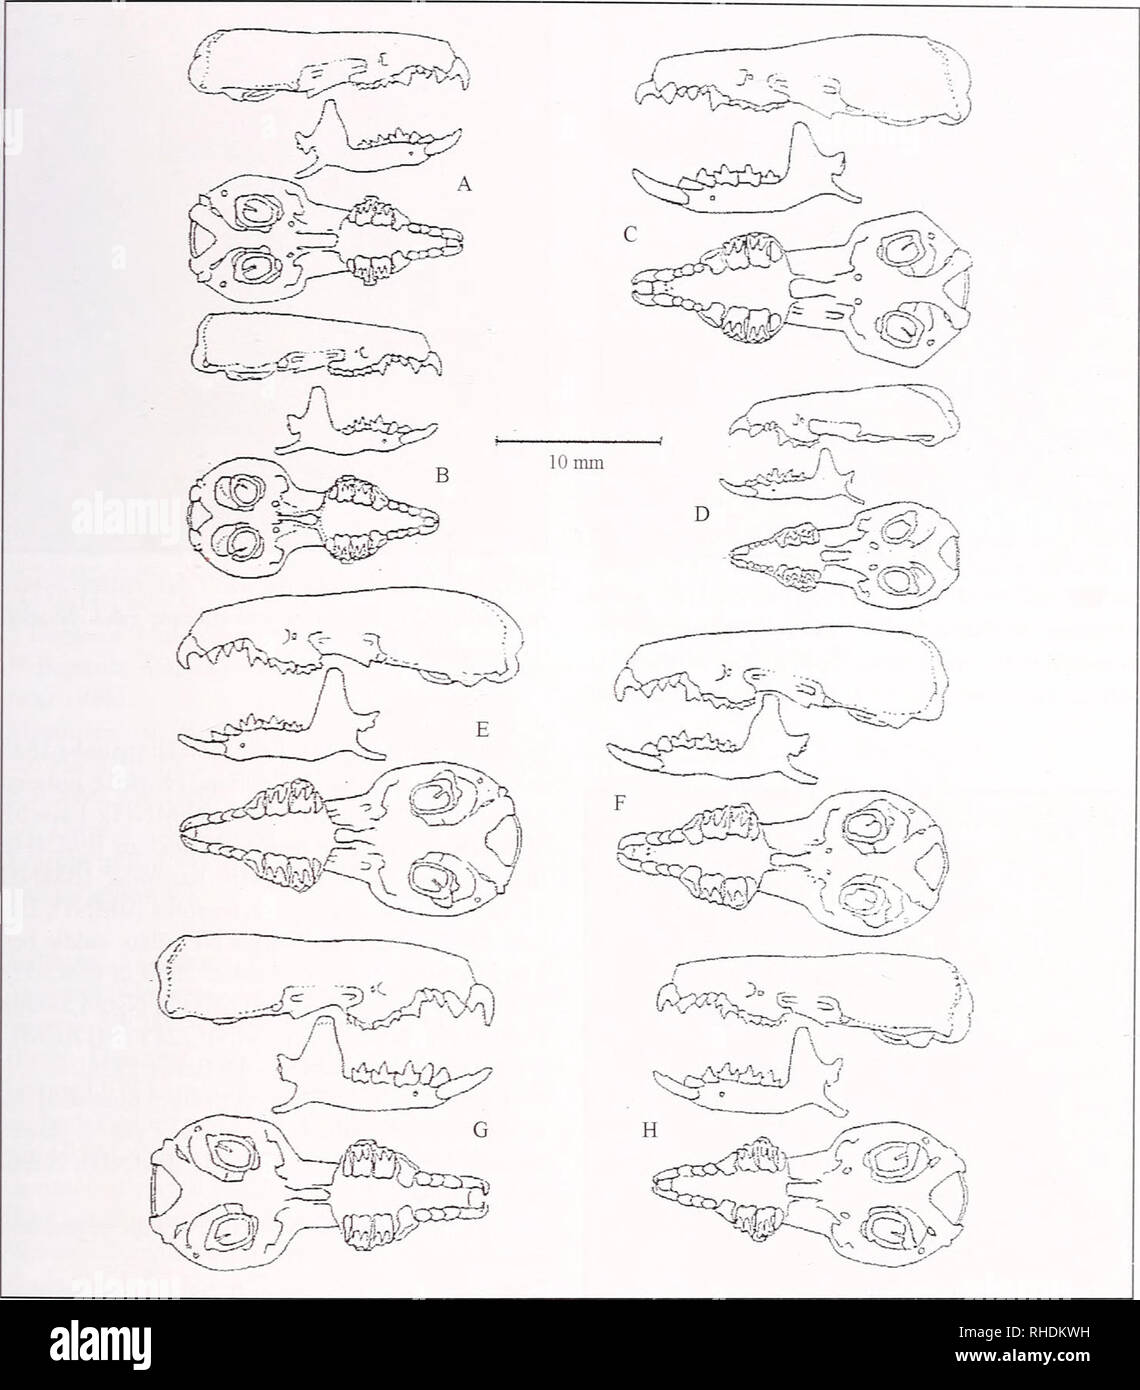 Bonner Zoologische Monographien Zoology Thorn Amp Kerbis Peterhans Small Mammals Of Uganda Fig 55 Shrew Skulls A Crocidura Fuscomnrma B C Elgonius C Simcus Lixus D Suncus